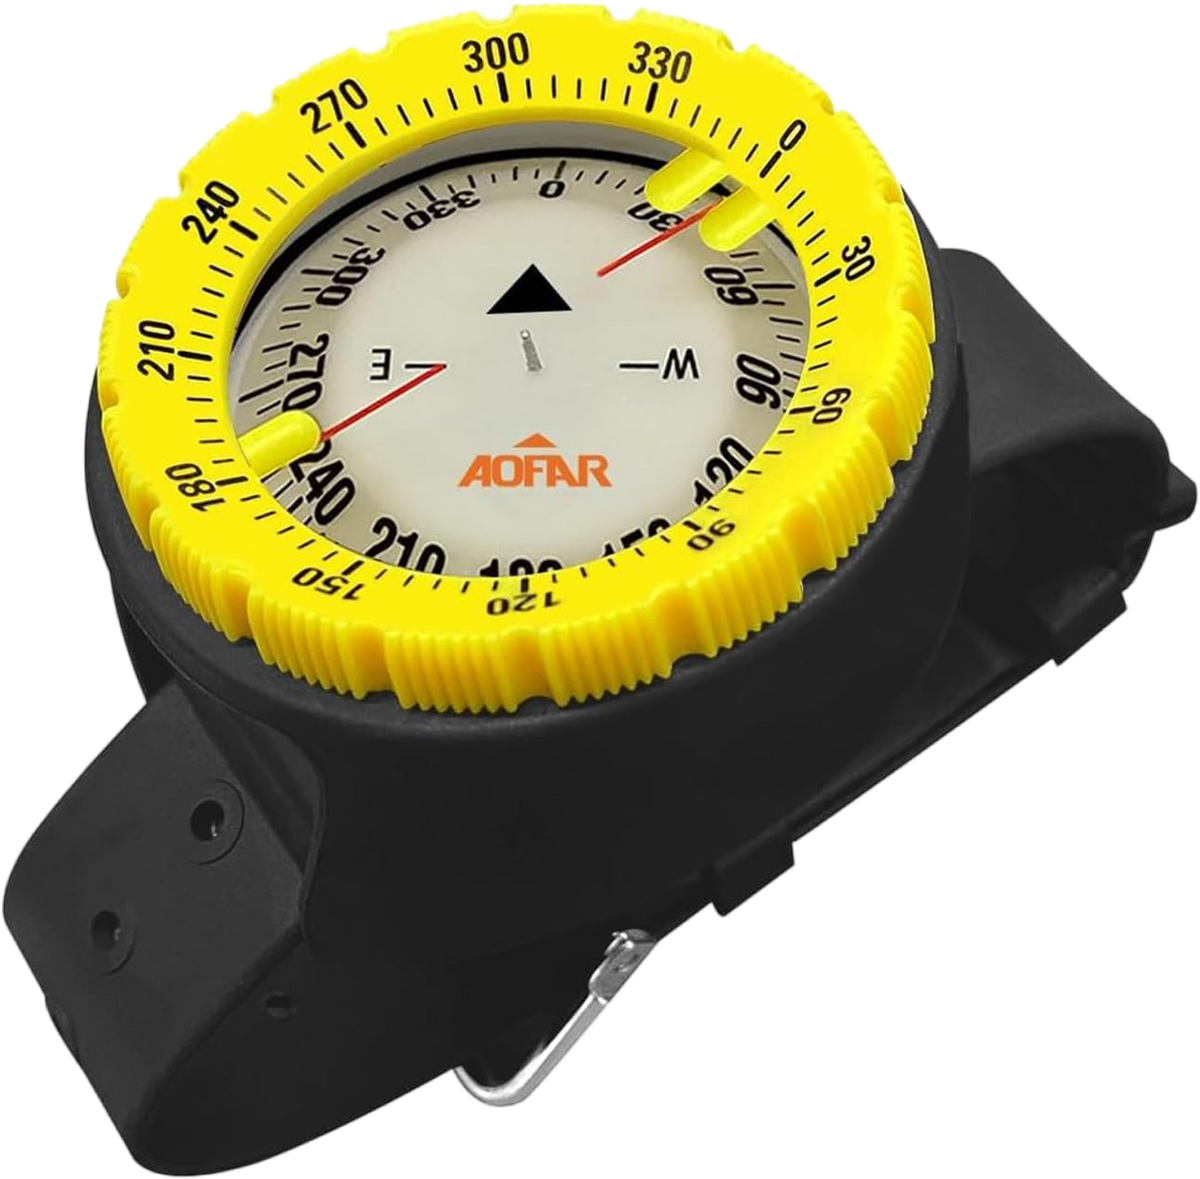 AF-Q60A Dive Wrist Compass